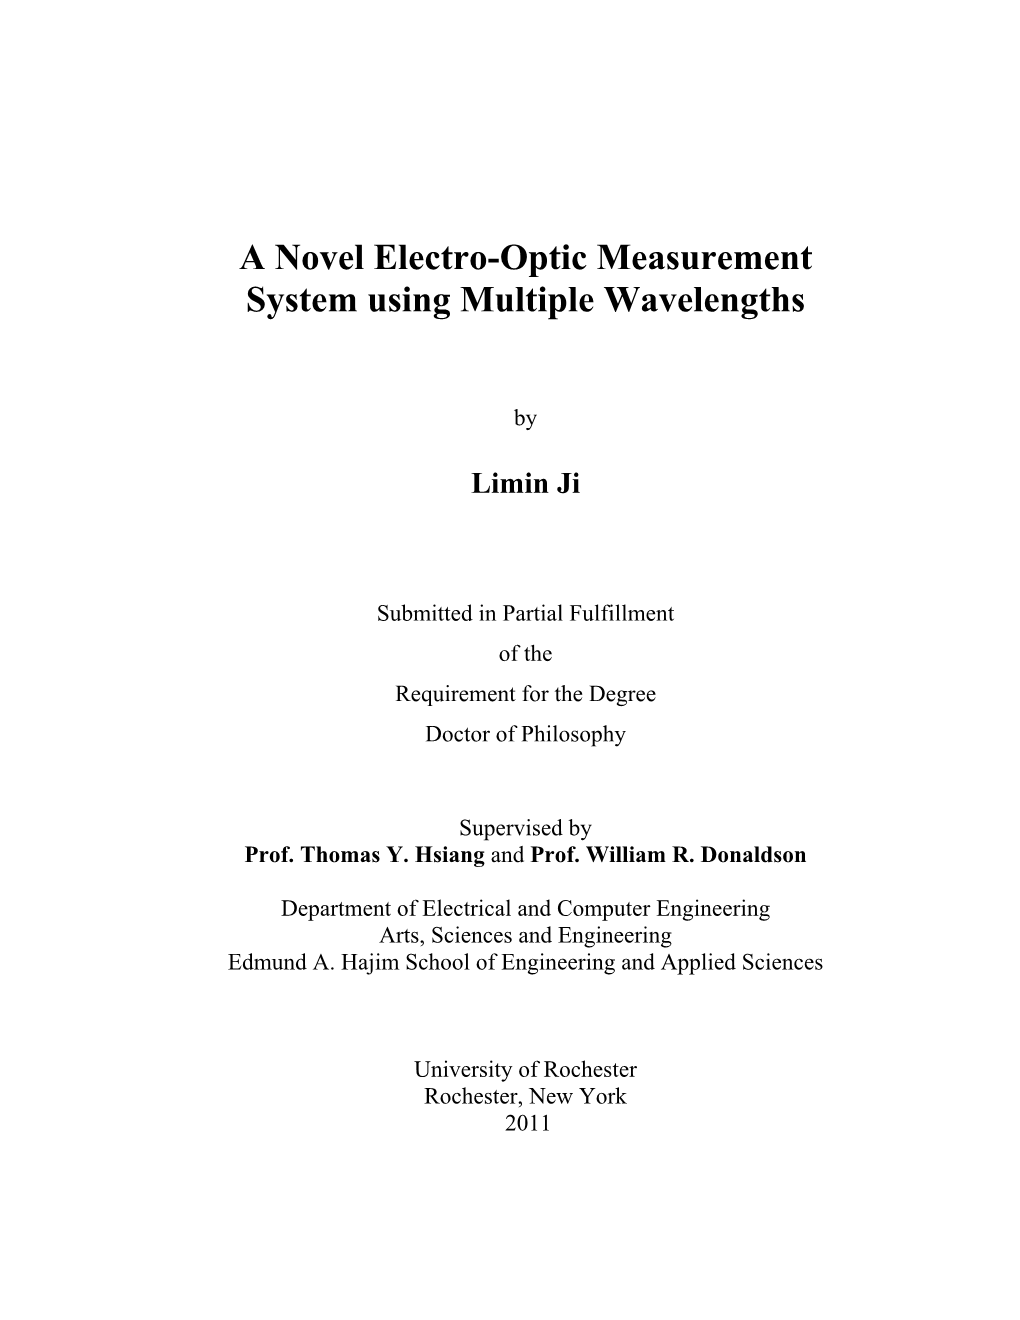 A Novel Electro-Optic Measurement System Using Multiple Wavelengths